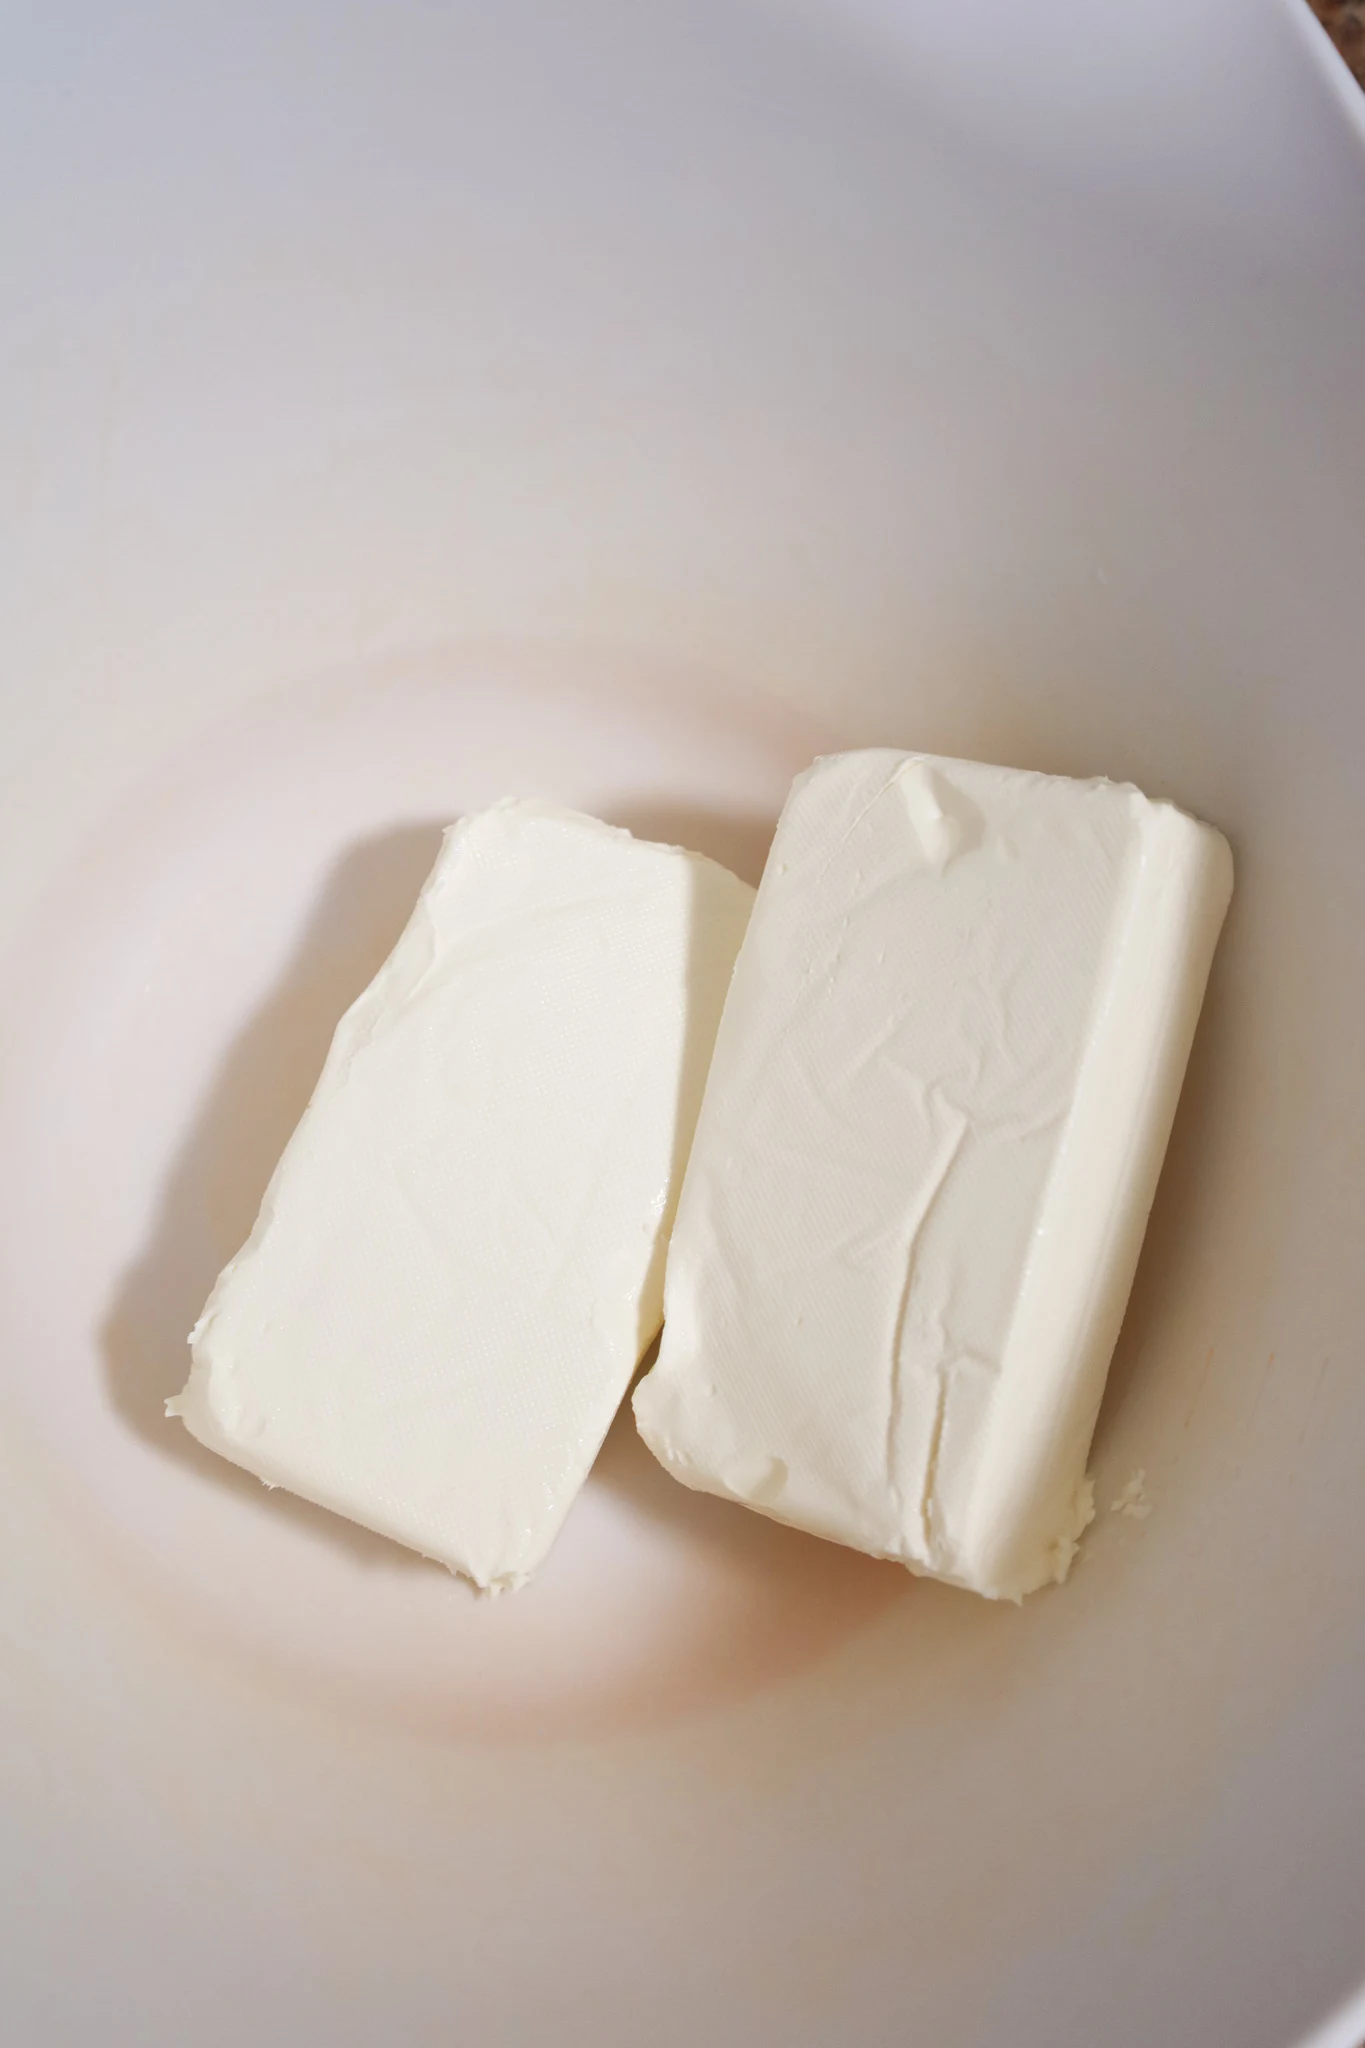 cream cheese bricks in a mixing bowl